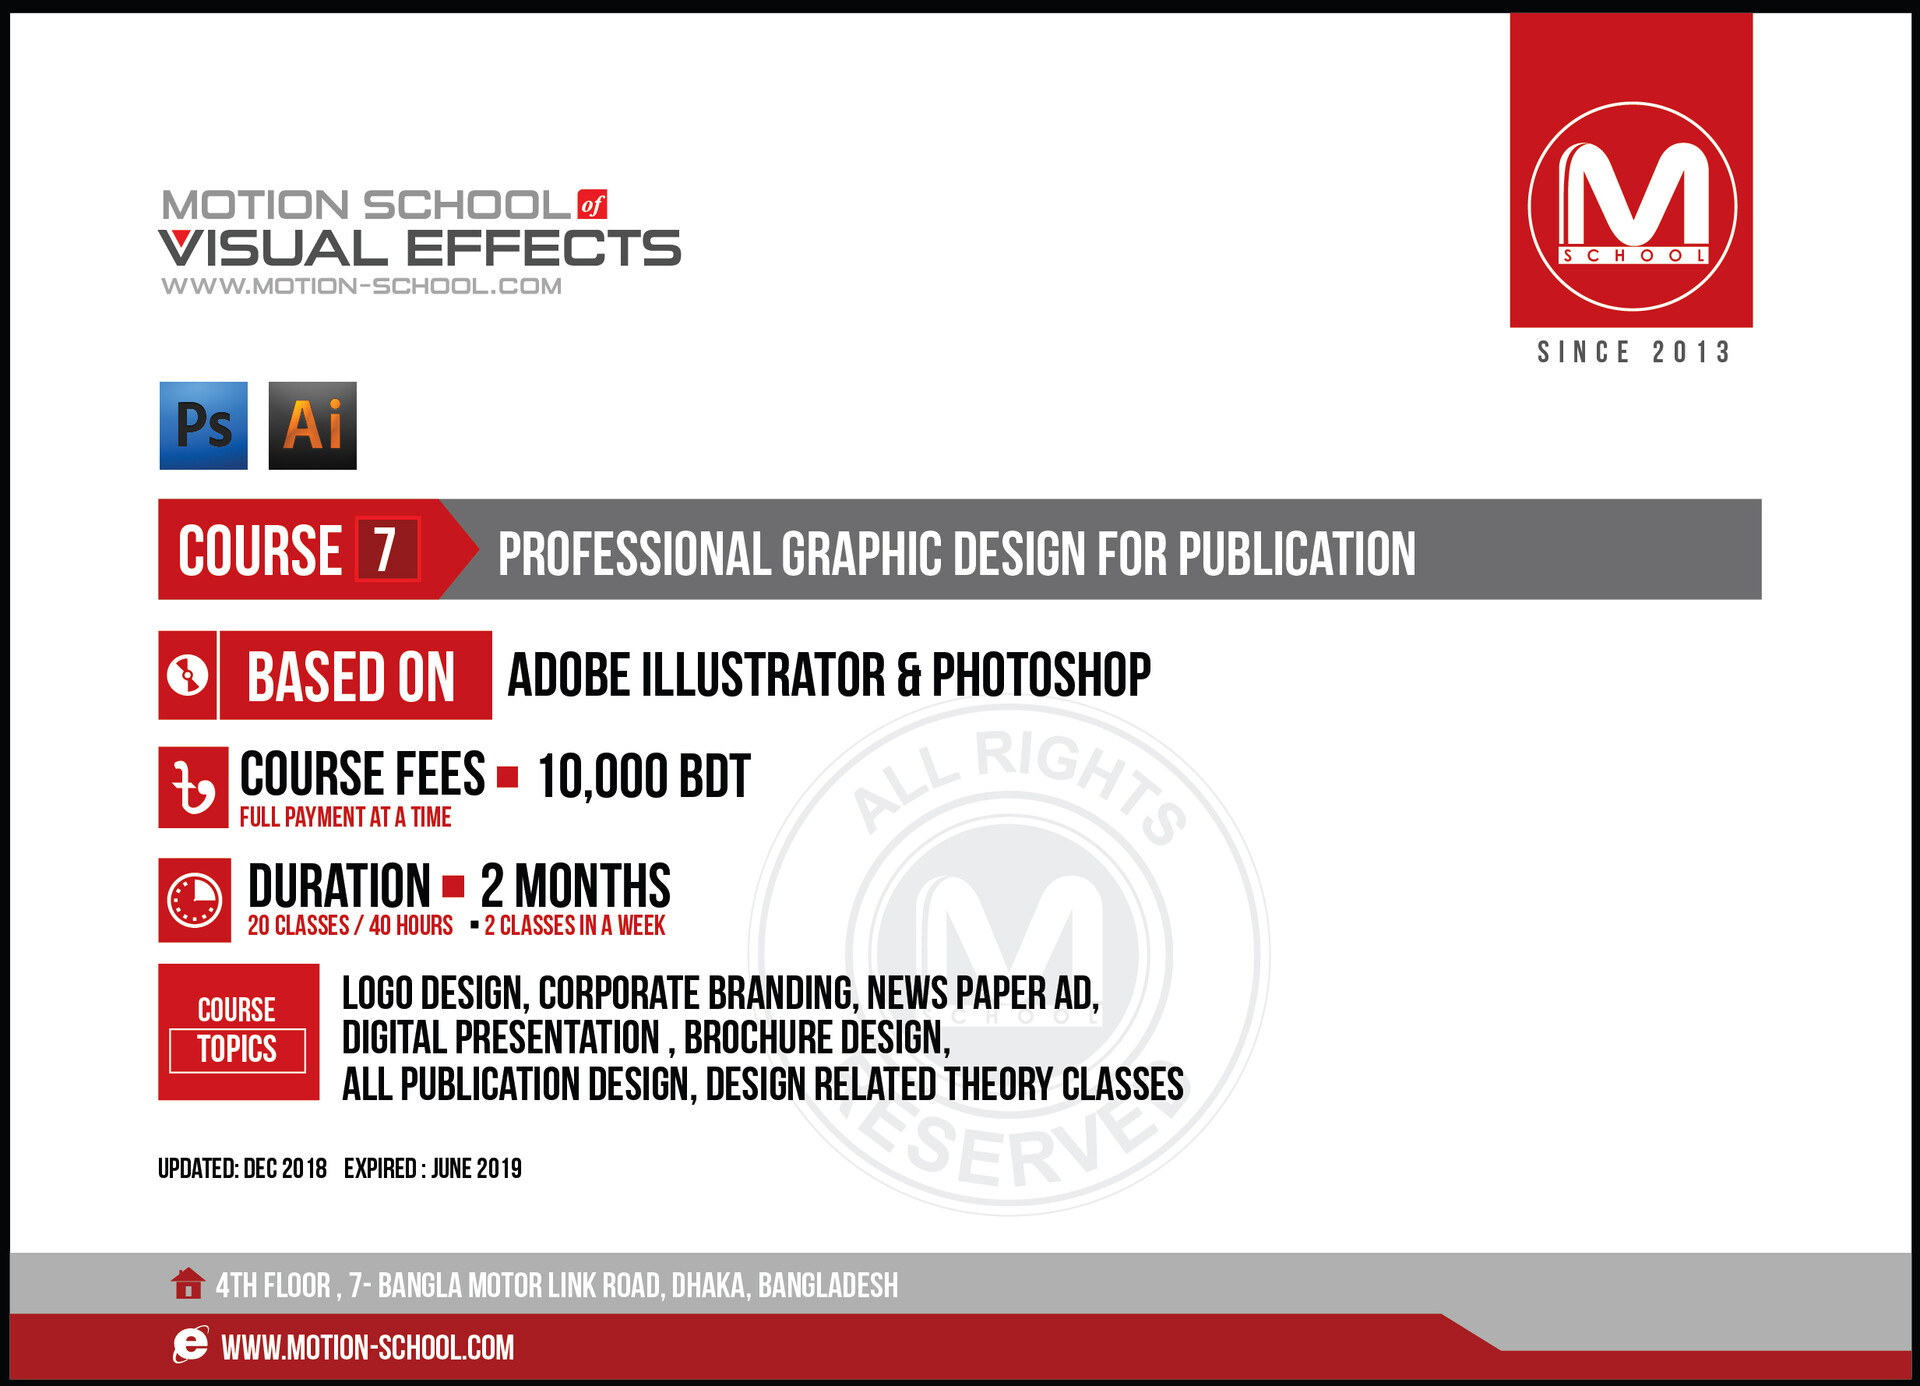 ArtStation - Courses & Fees of Motion School  | +88  01770705474